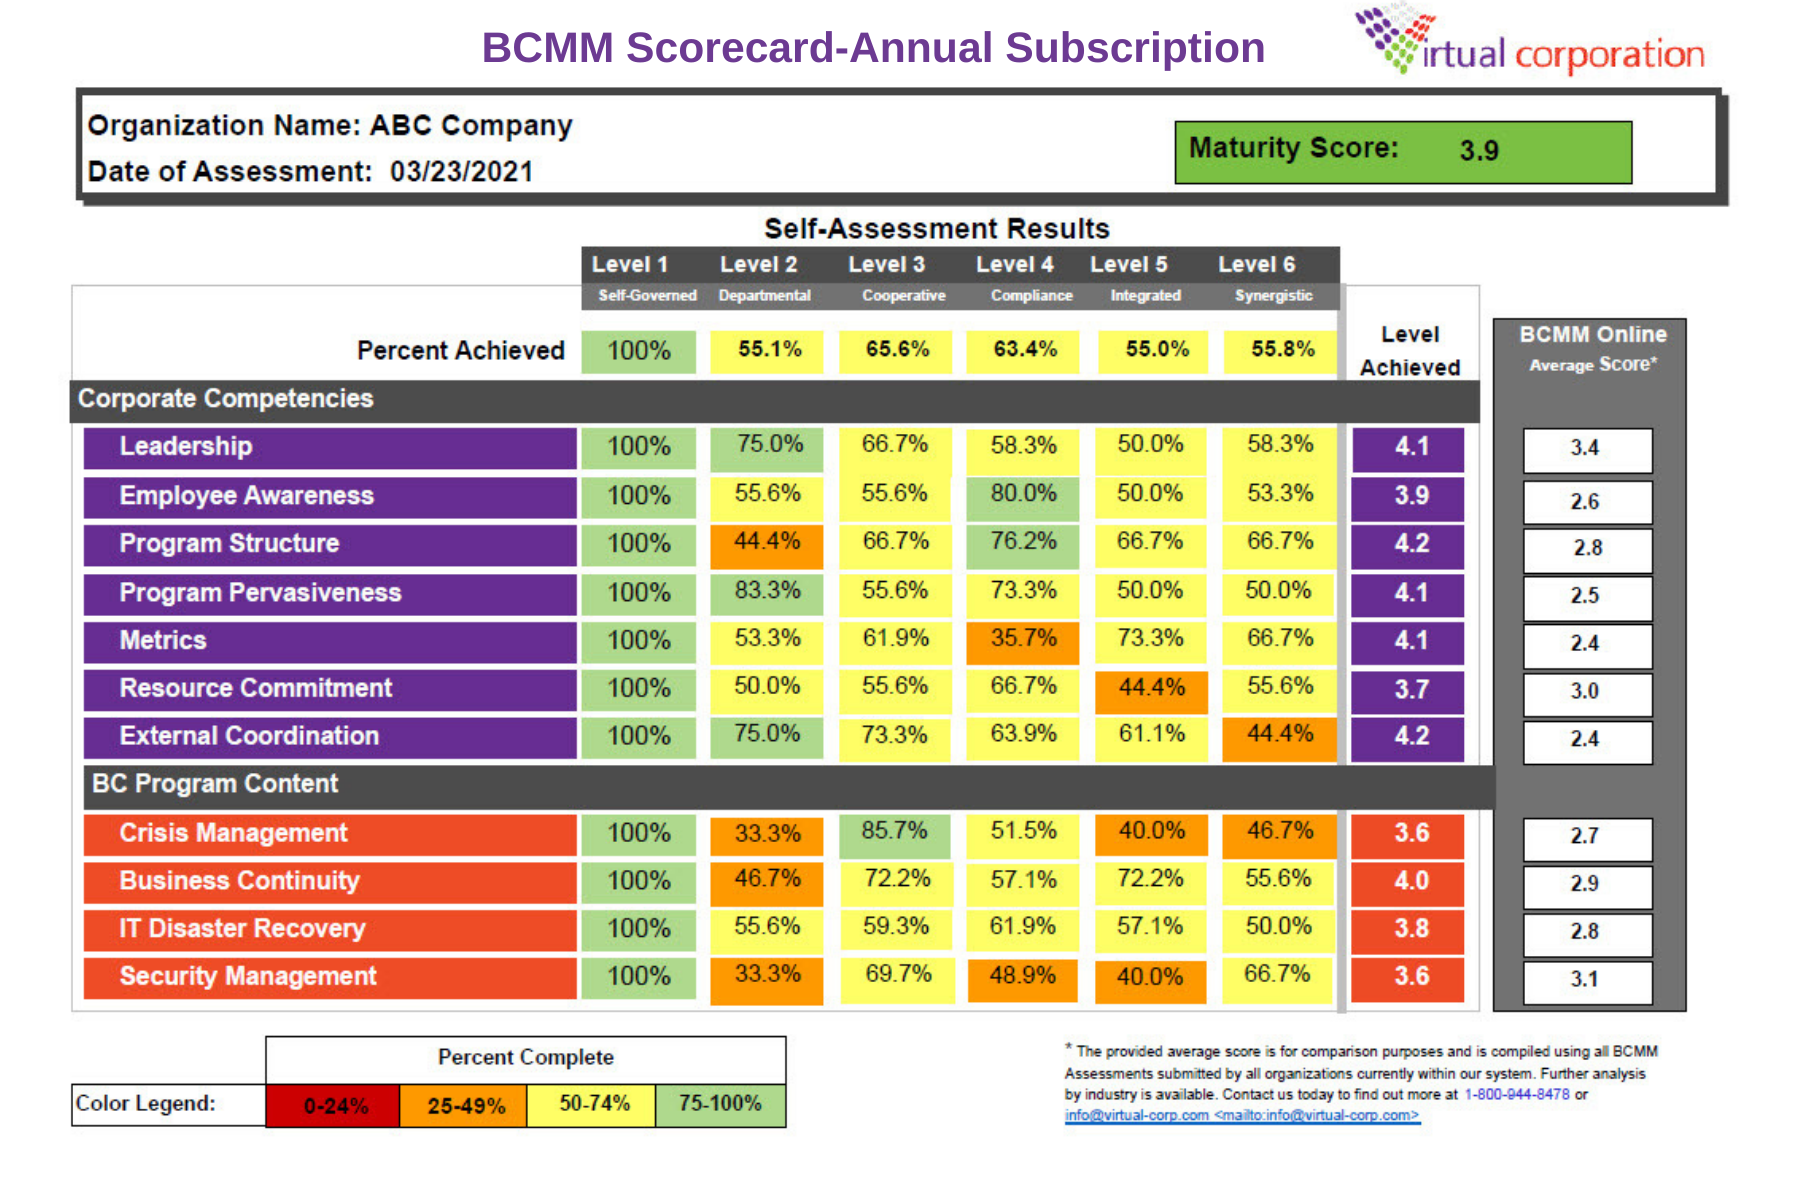 BCMM Scorecard for the Annual Subscription